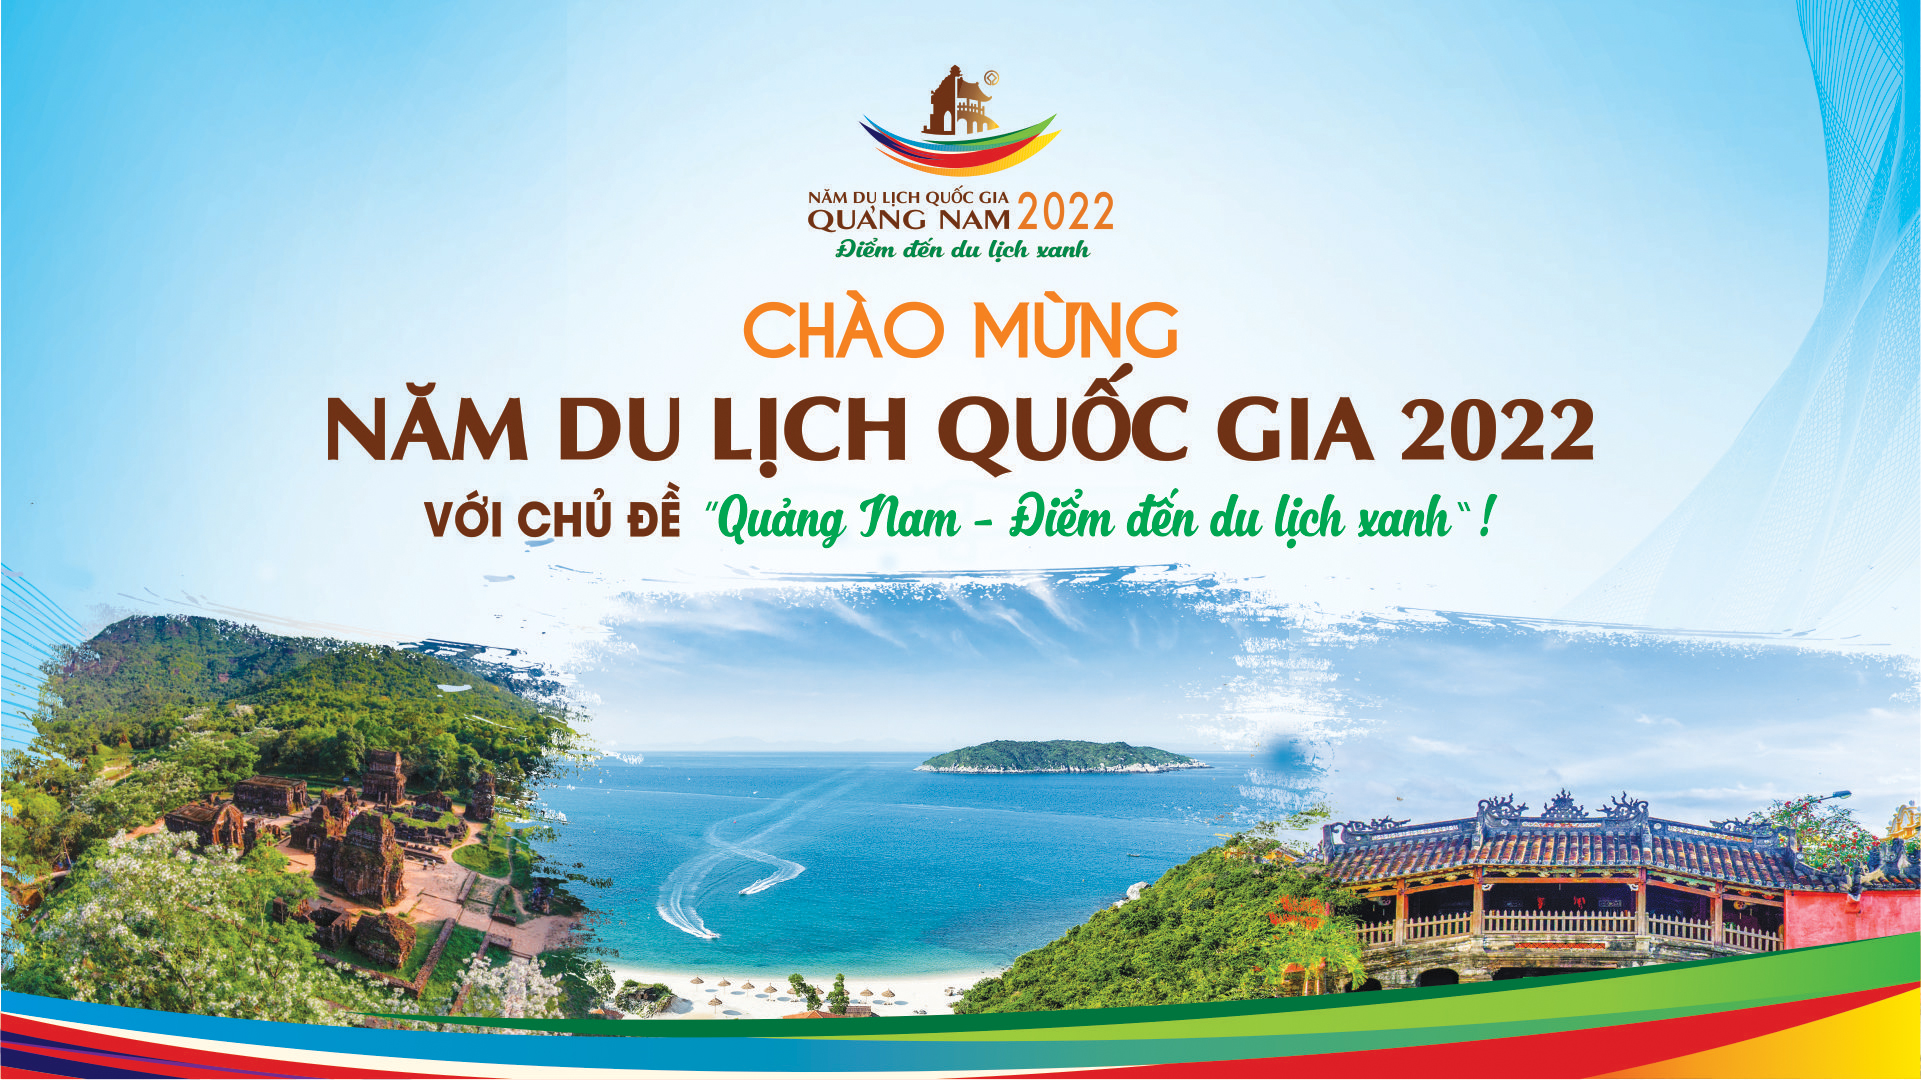 Visit Vietnam Year - Quang Nam 2022 “Quang Nam - A Green tourism destination”